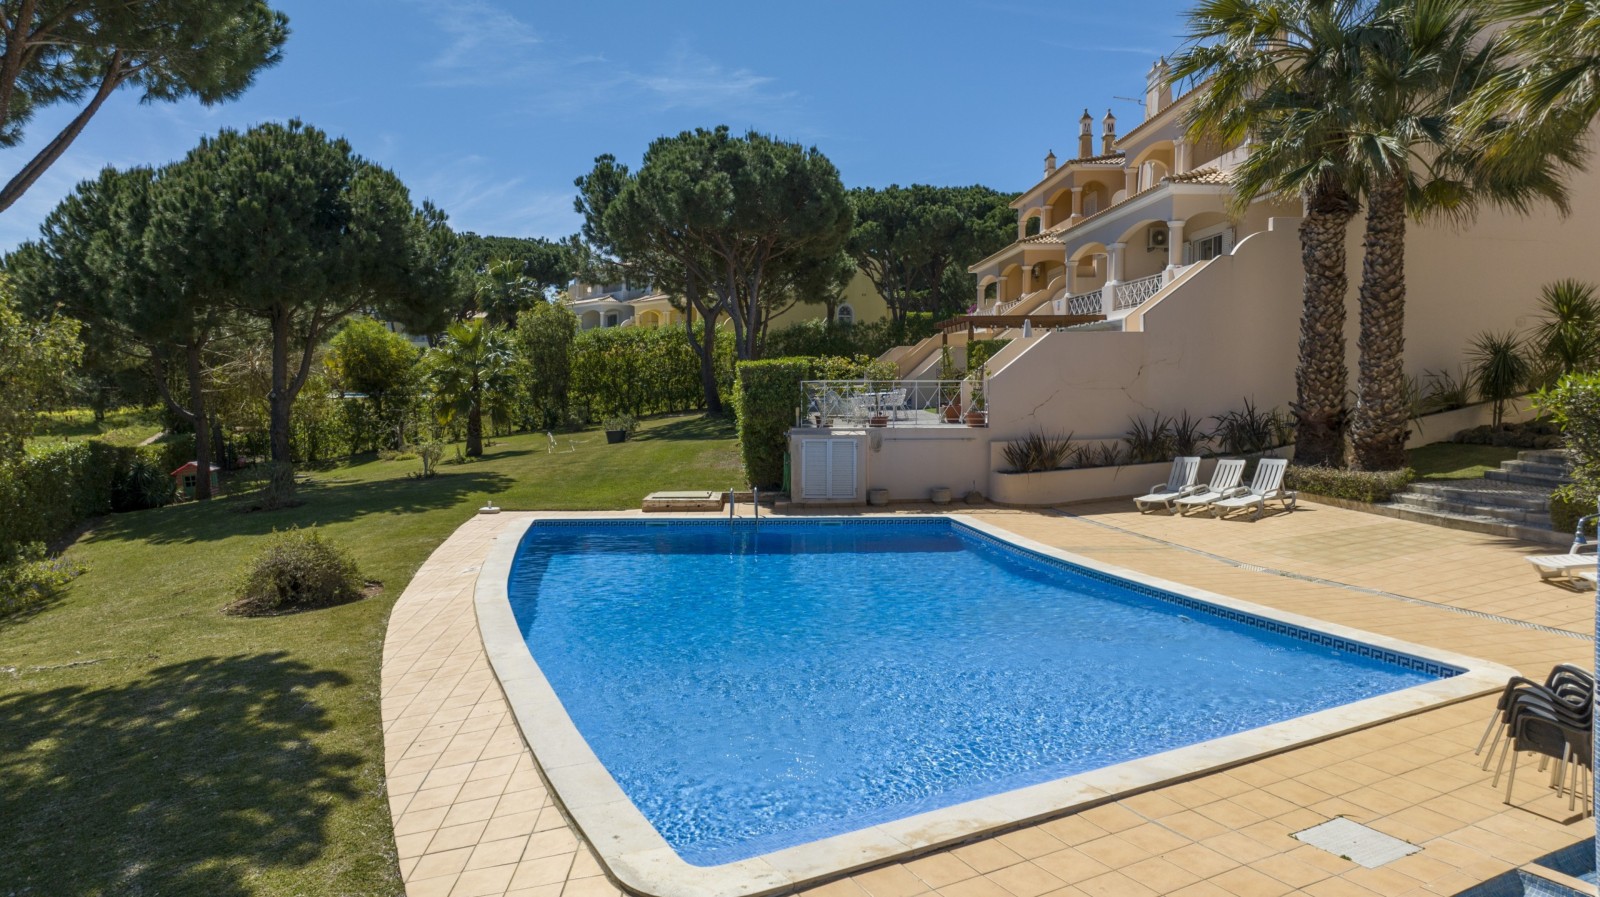 Moradia geminada V4, com piscina, para venda em Vilamoura, Algarve_237486